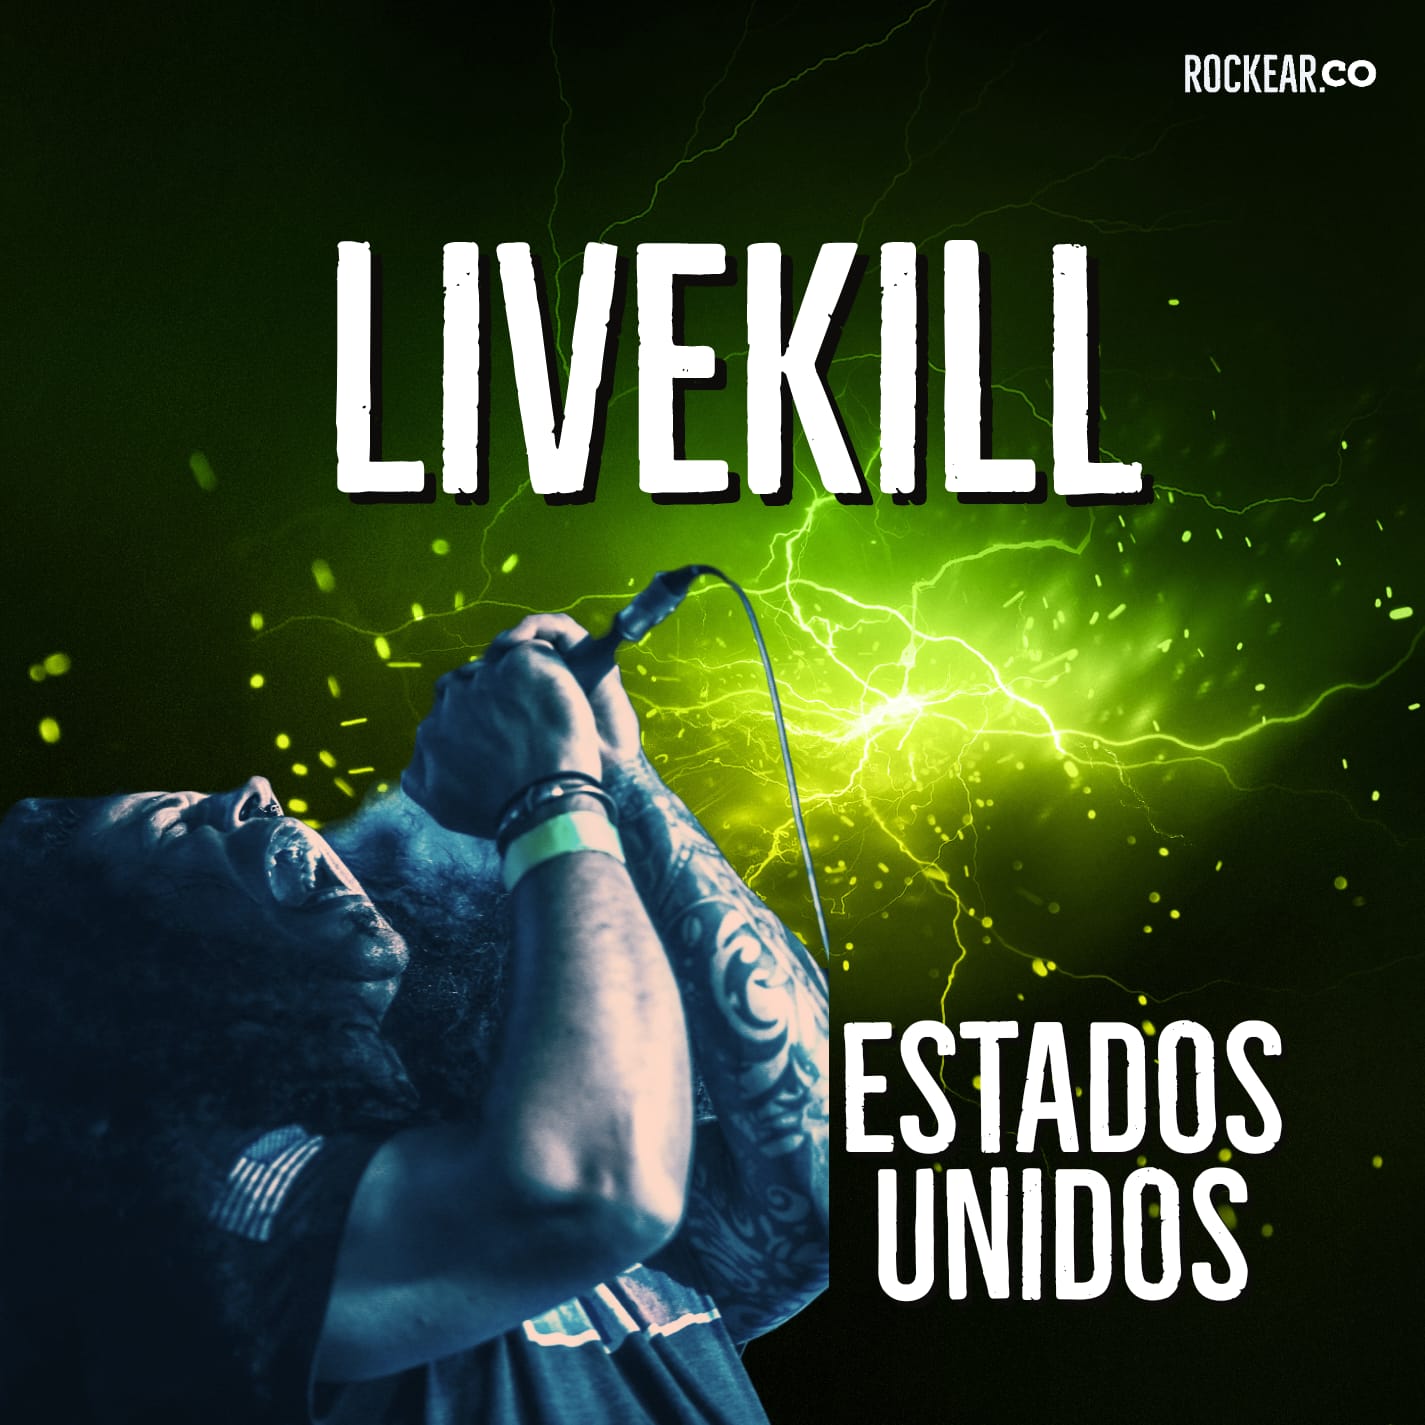 Livekill Nota en Rockear.Co